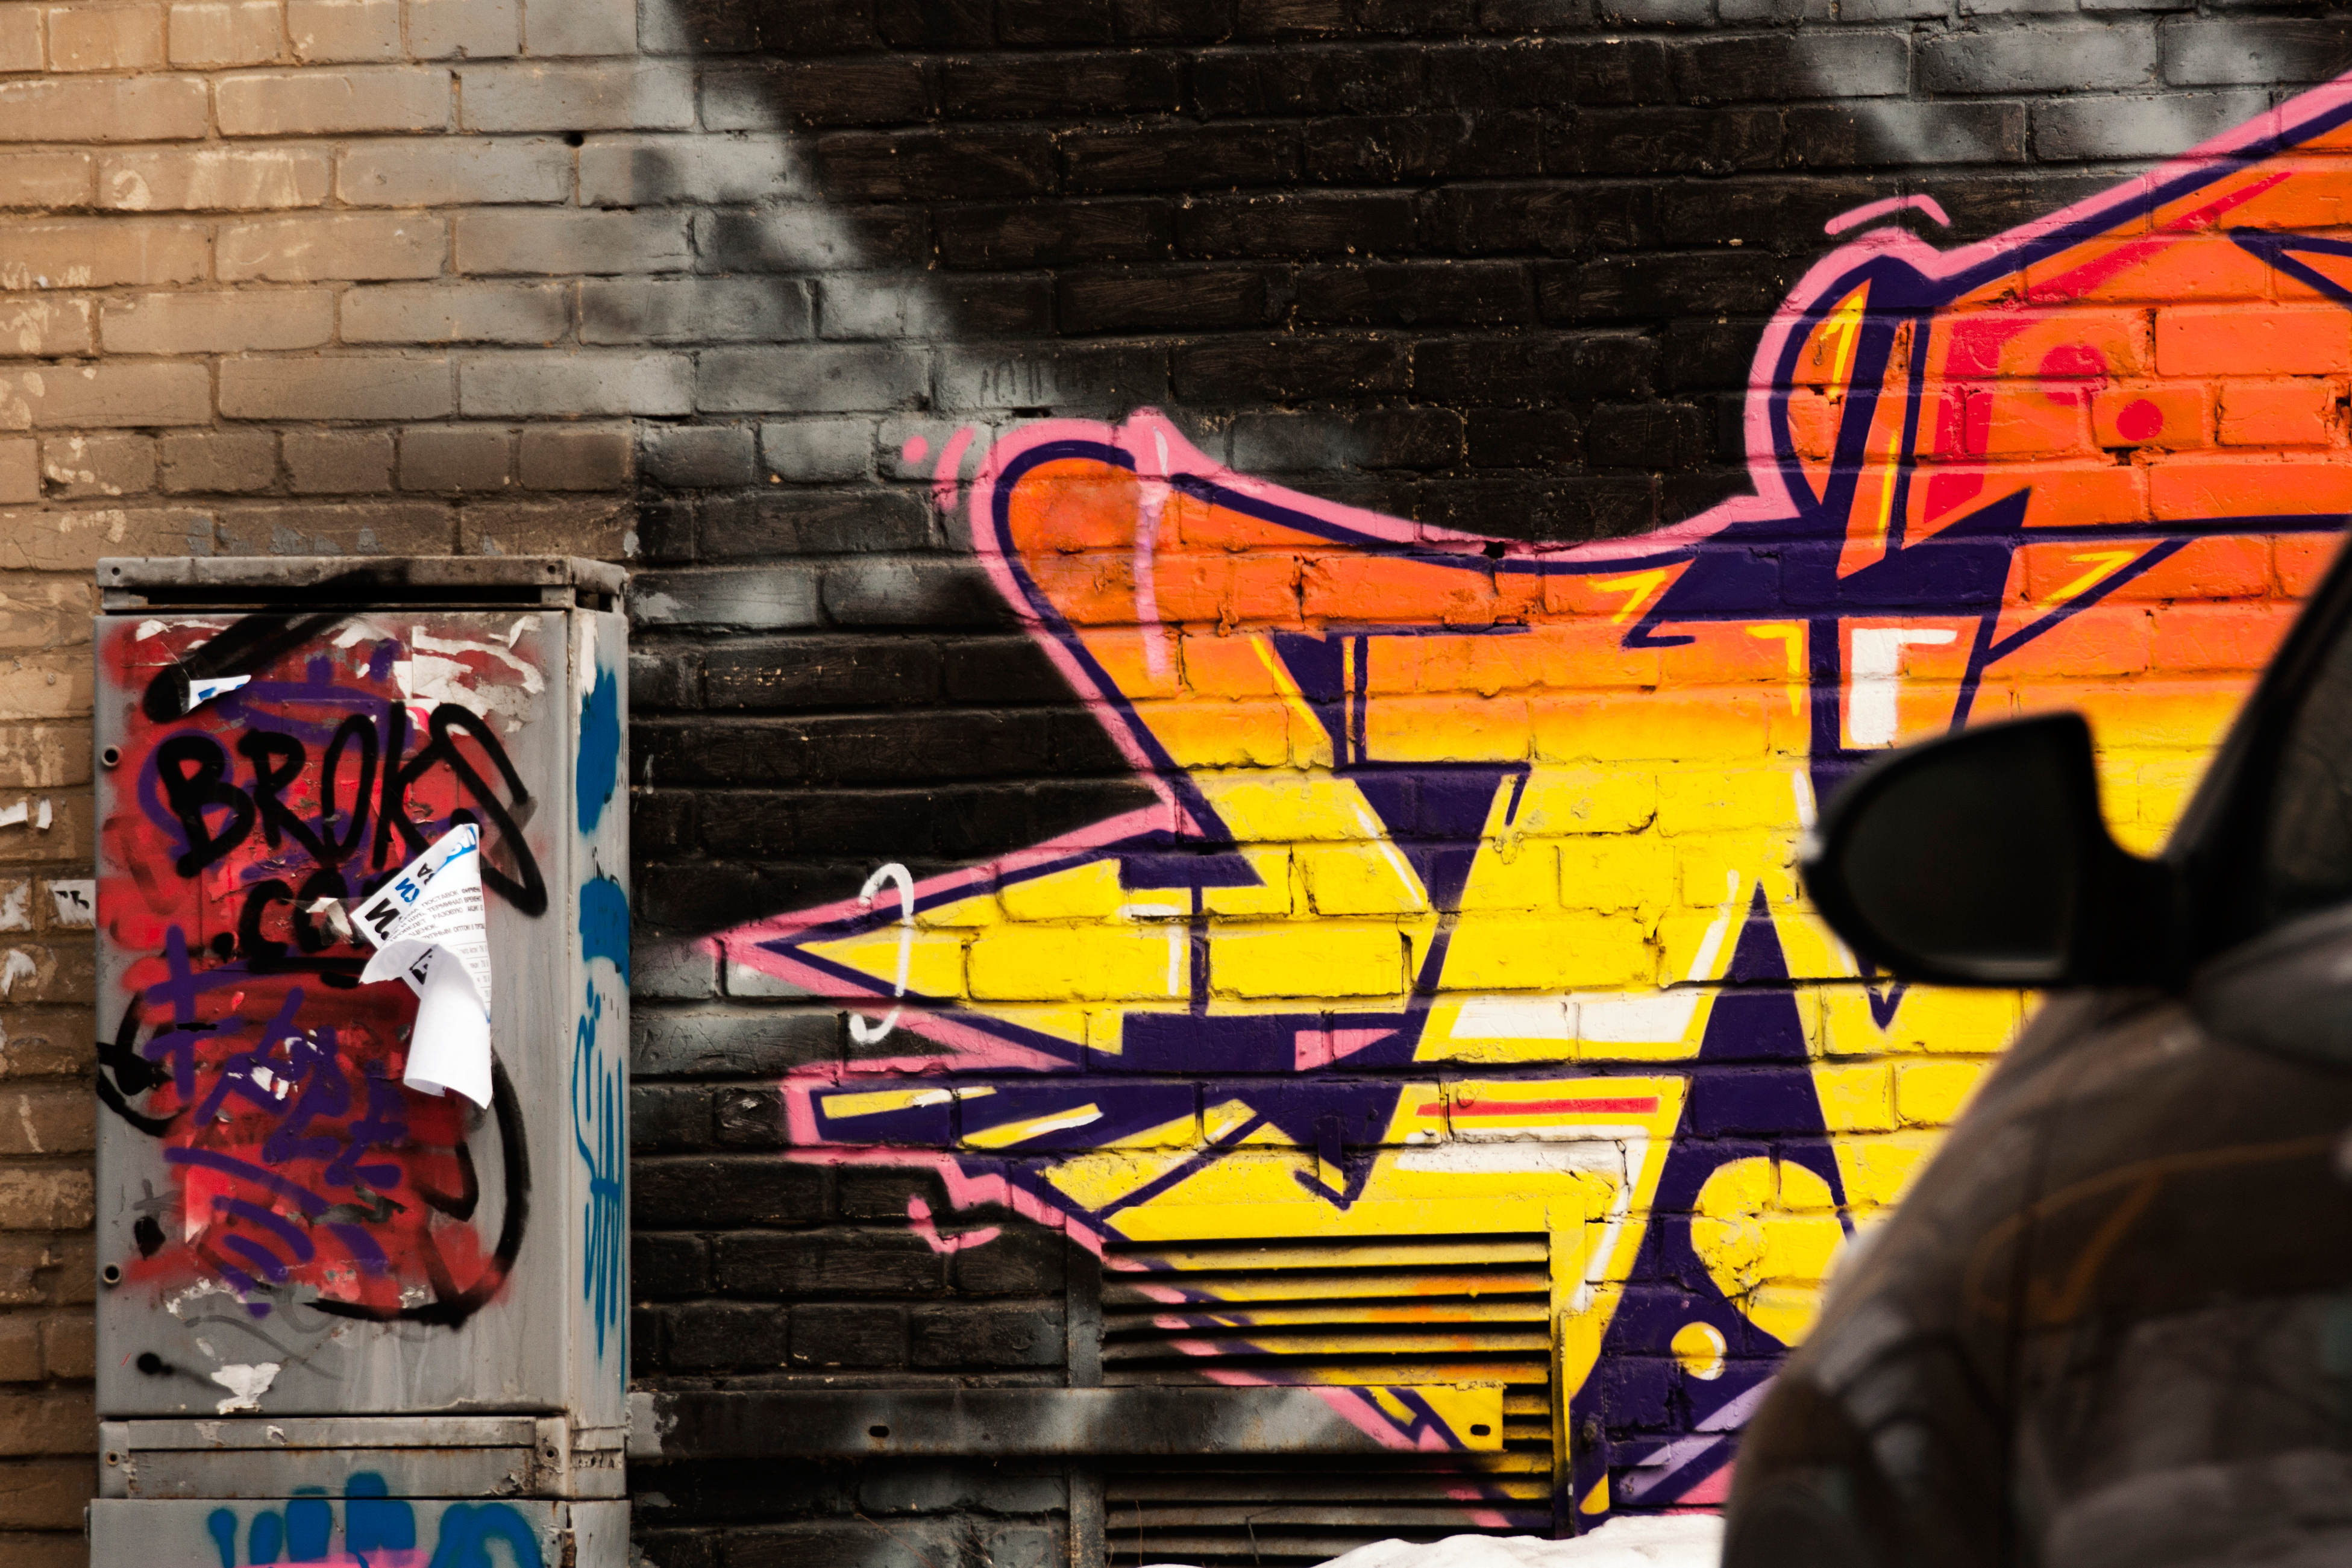 Обои на телефон андеграунд. Граффити. Крутые граффити. Граффити обои на стену. Стена с граффити для фотошопа.